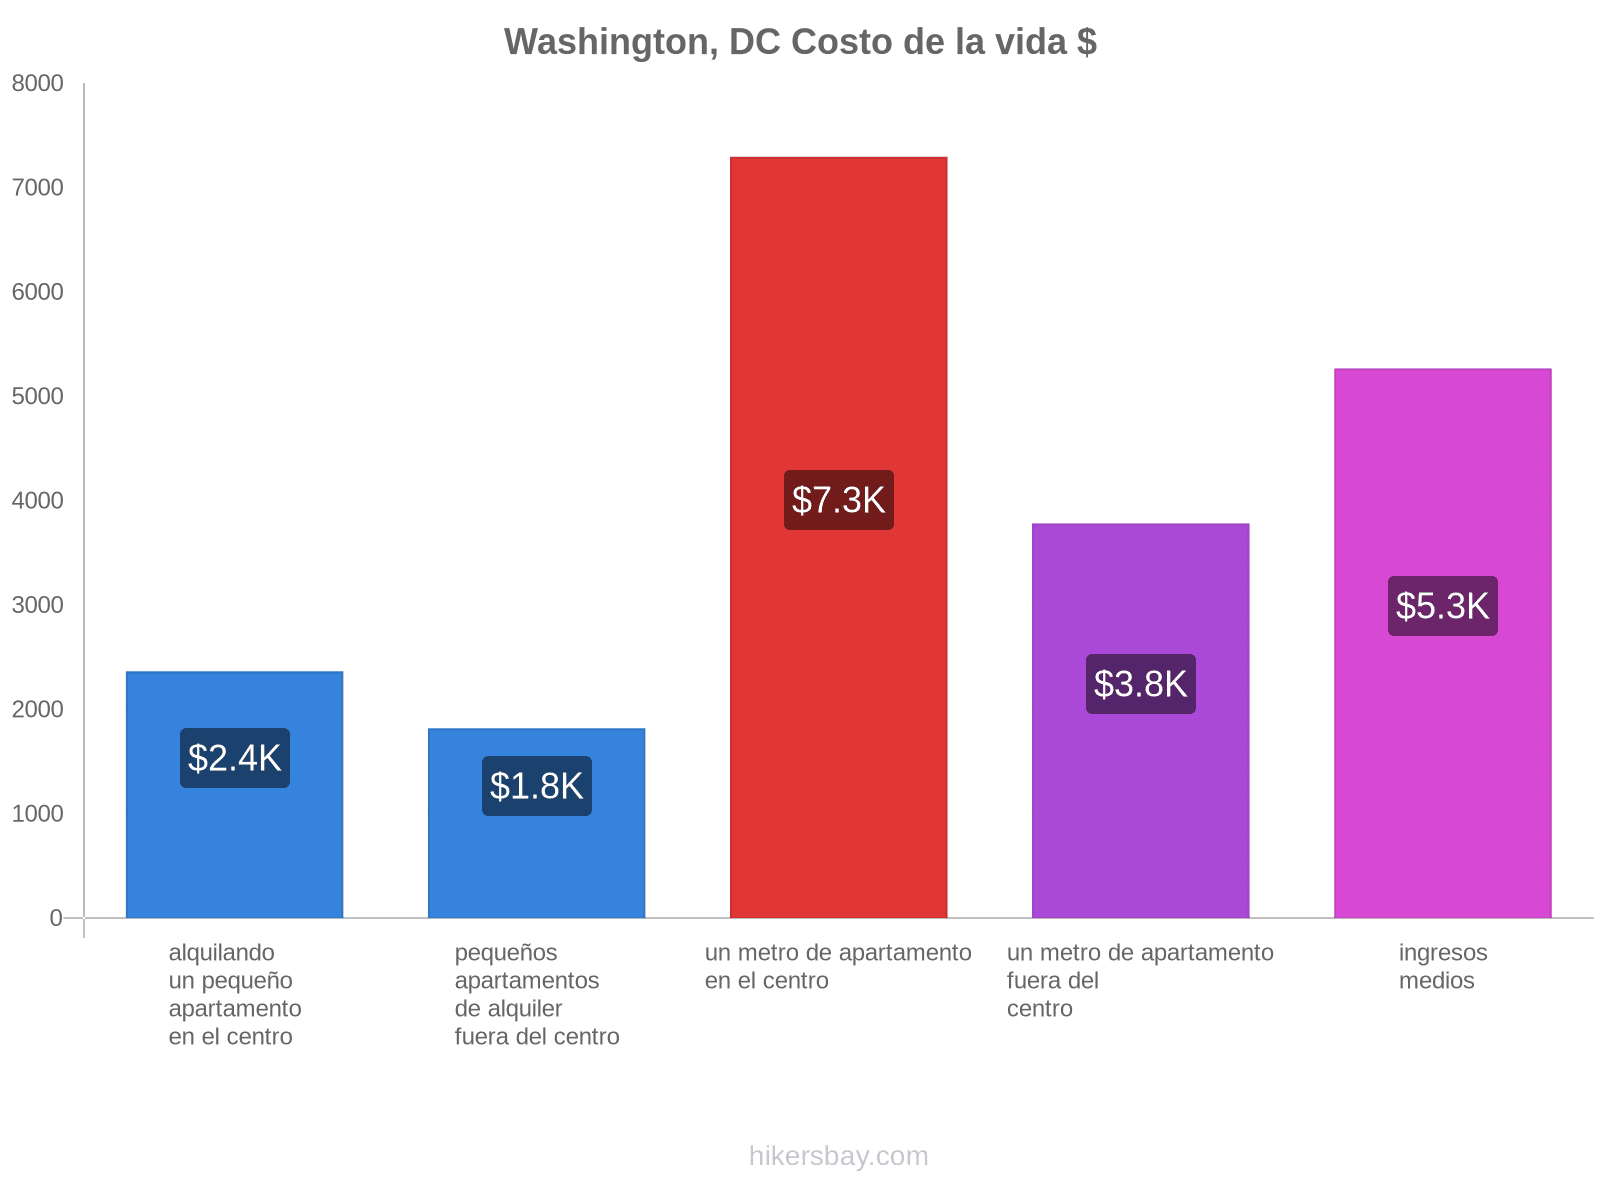 Washington, DC costo de la vida hikersbay.com